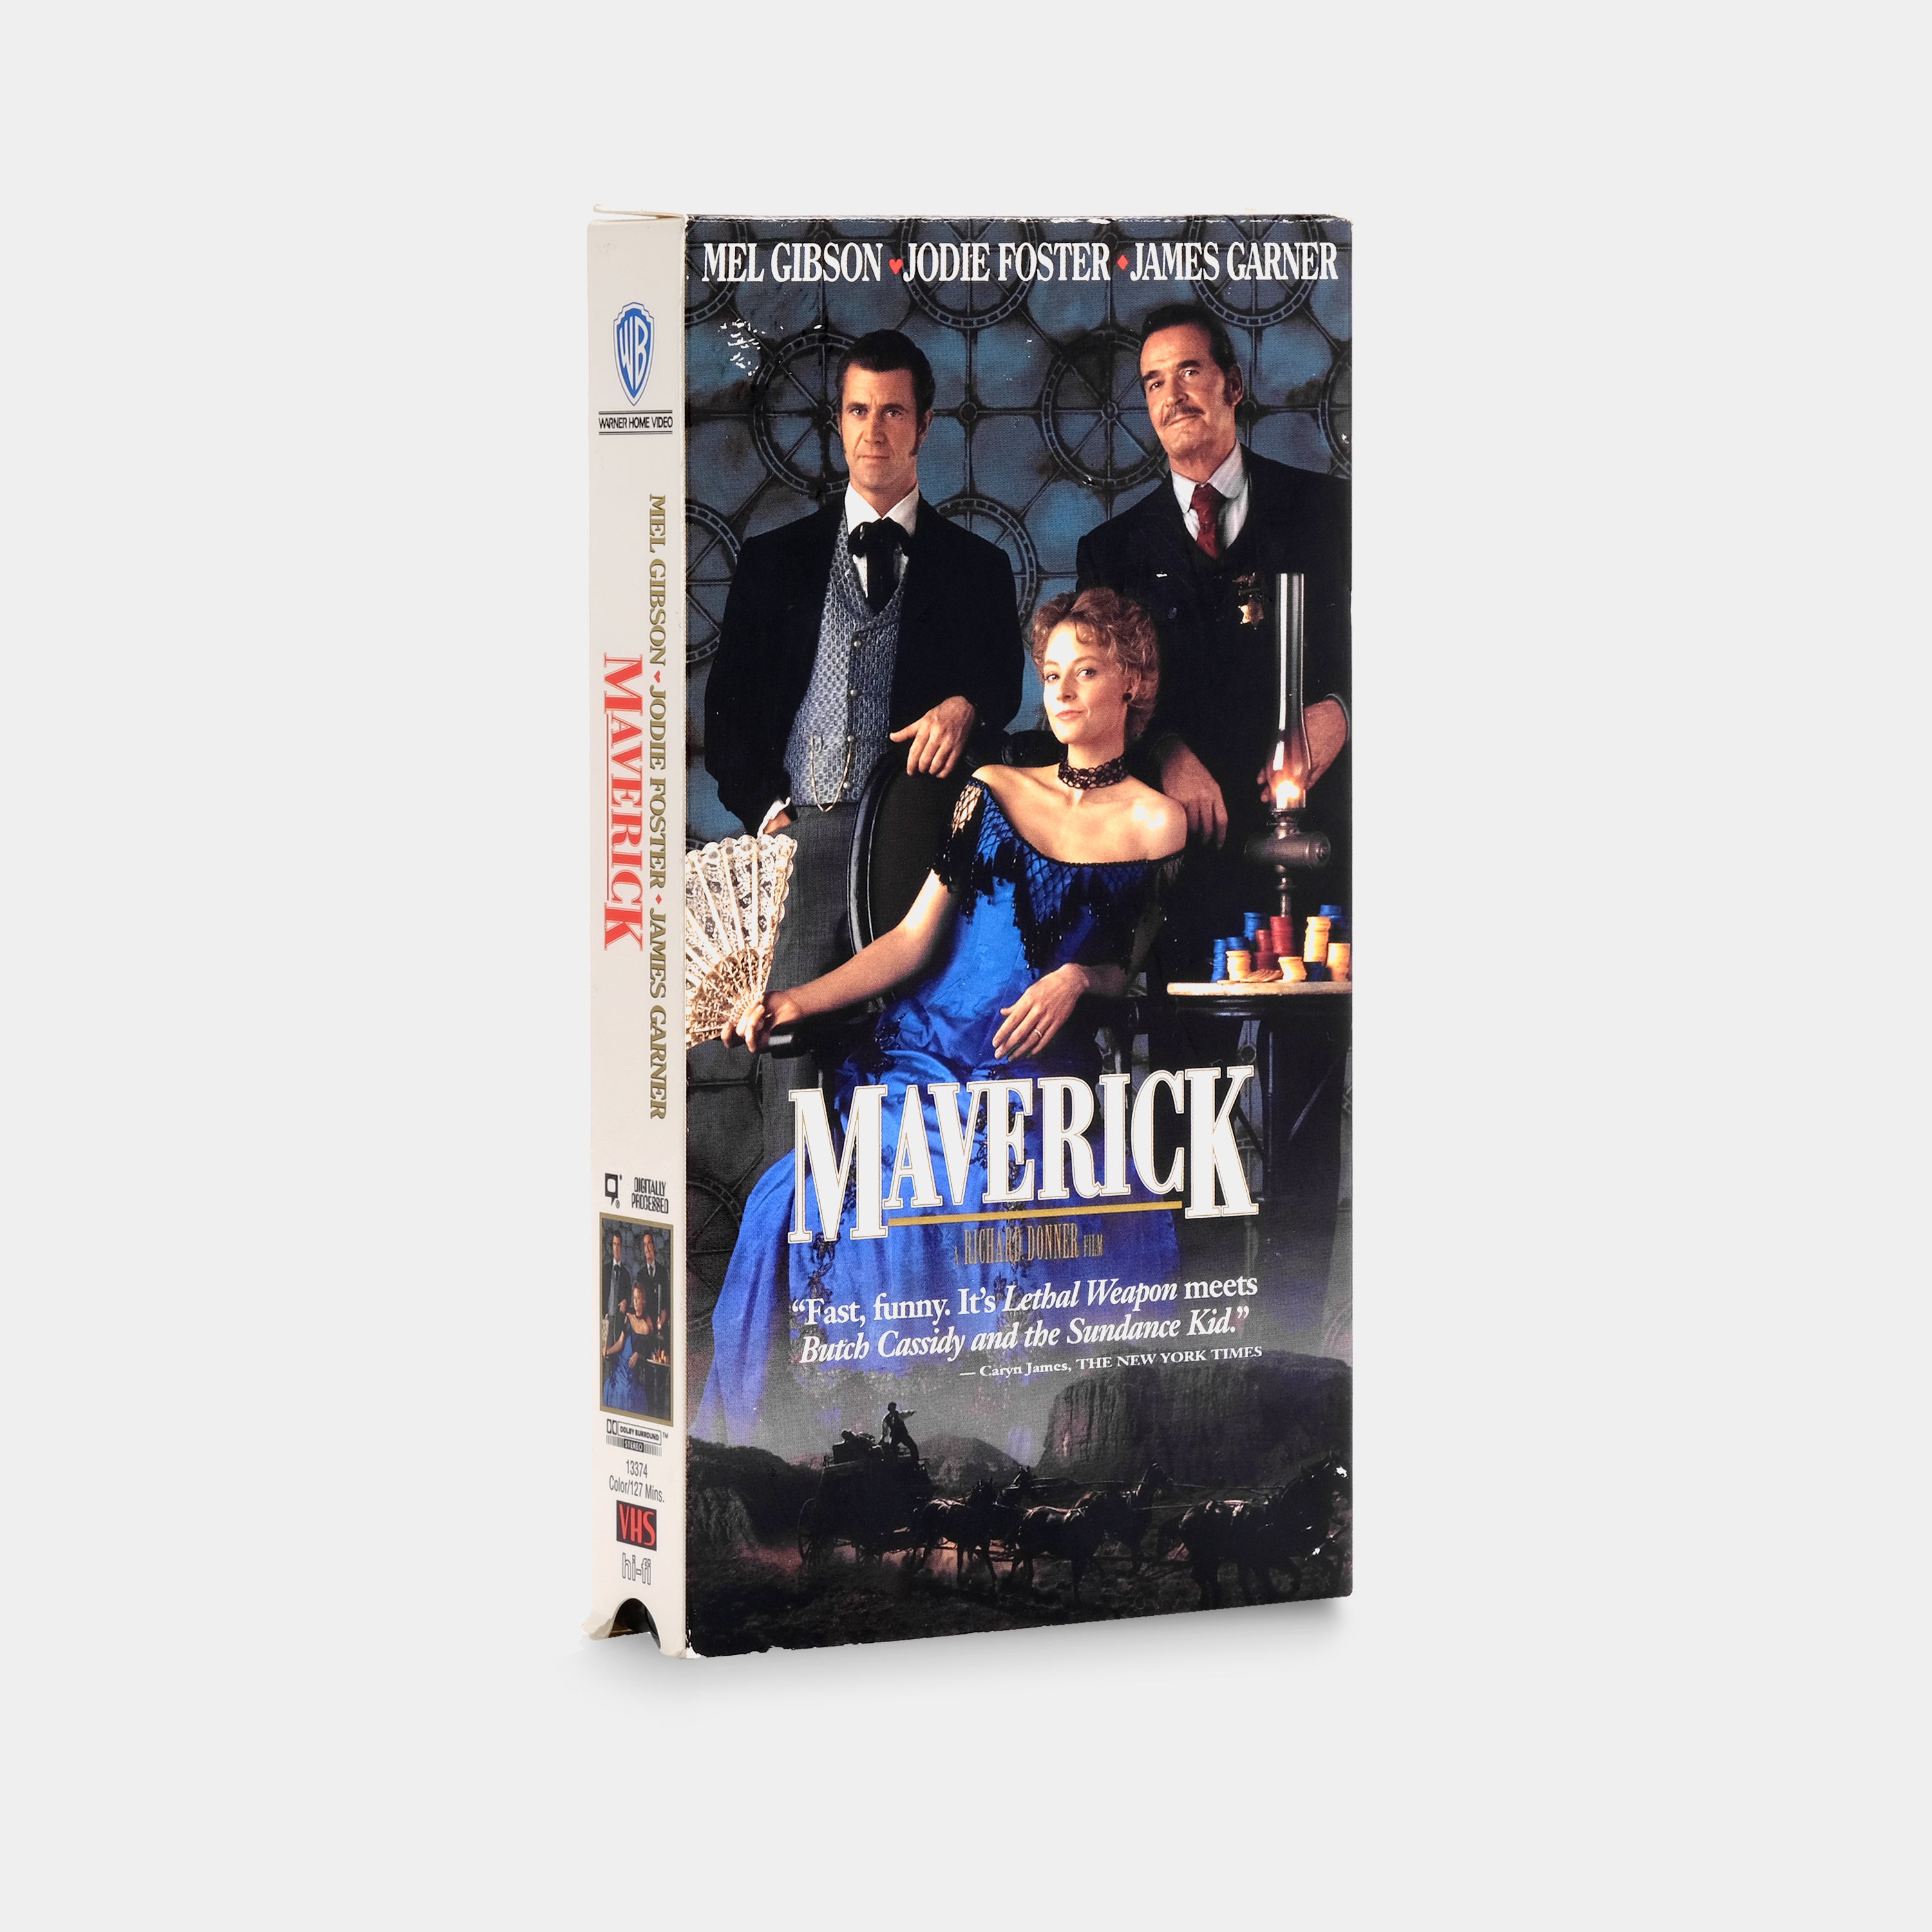 Maverick VHS Tape